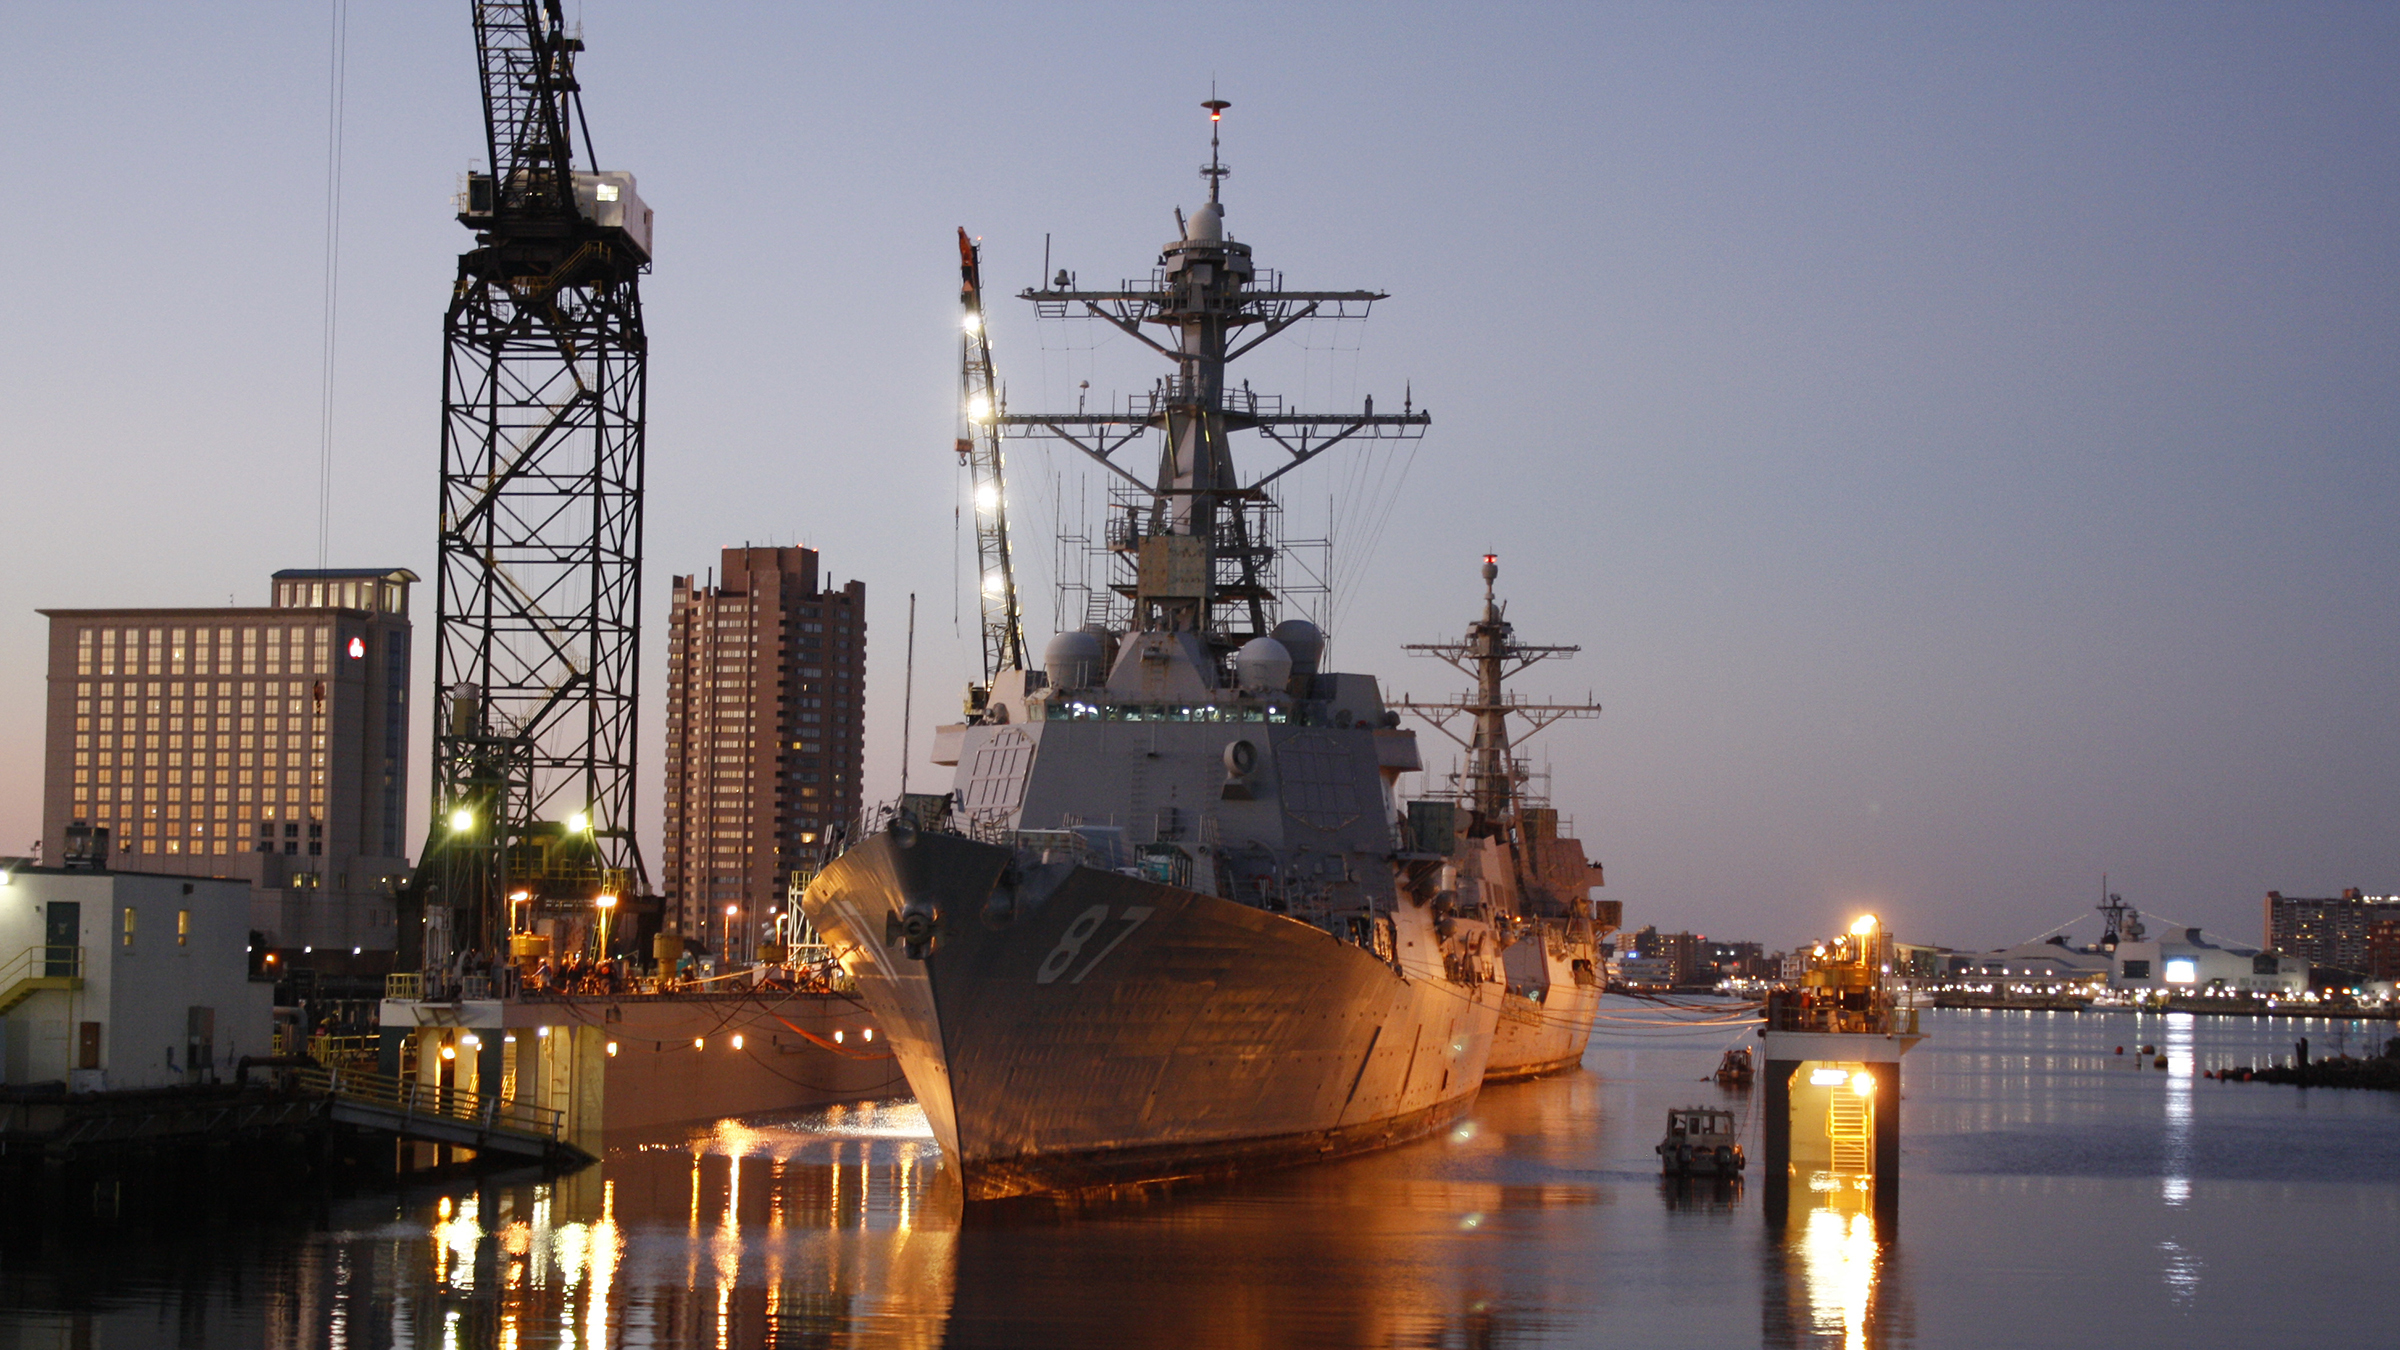 San Diego Naval Shipyard